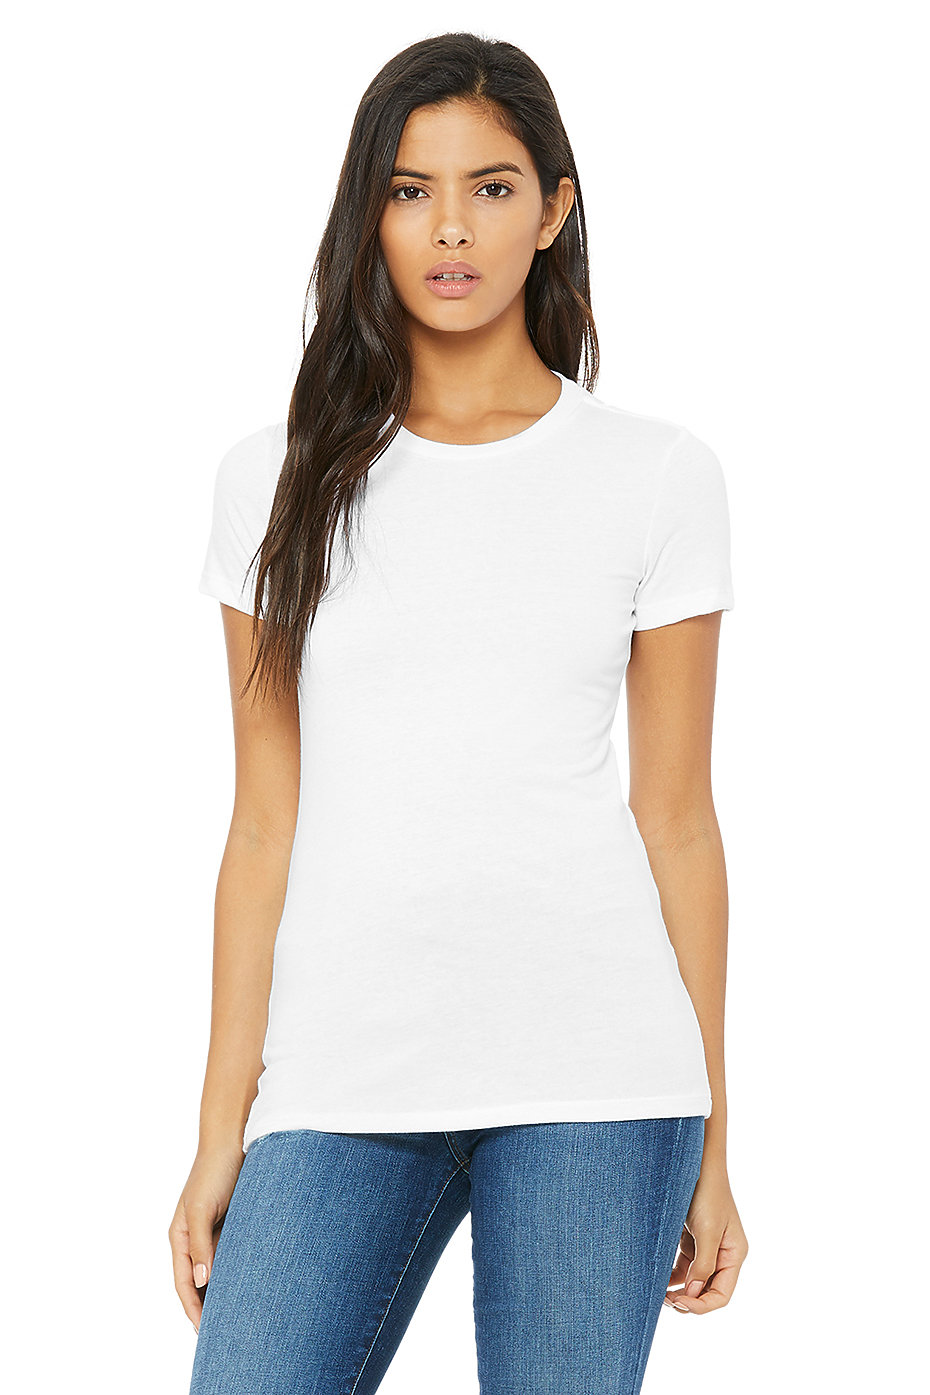 Download Wholesale Tee Shirts Bulk Plain Blank T Shirts Womens Wholesale Clothing Distributors Bella Canvas